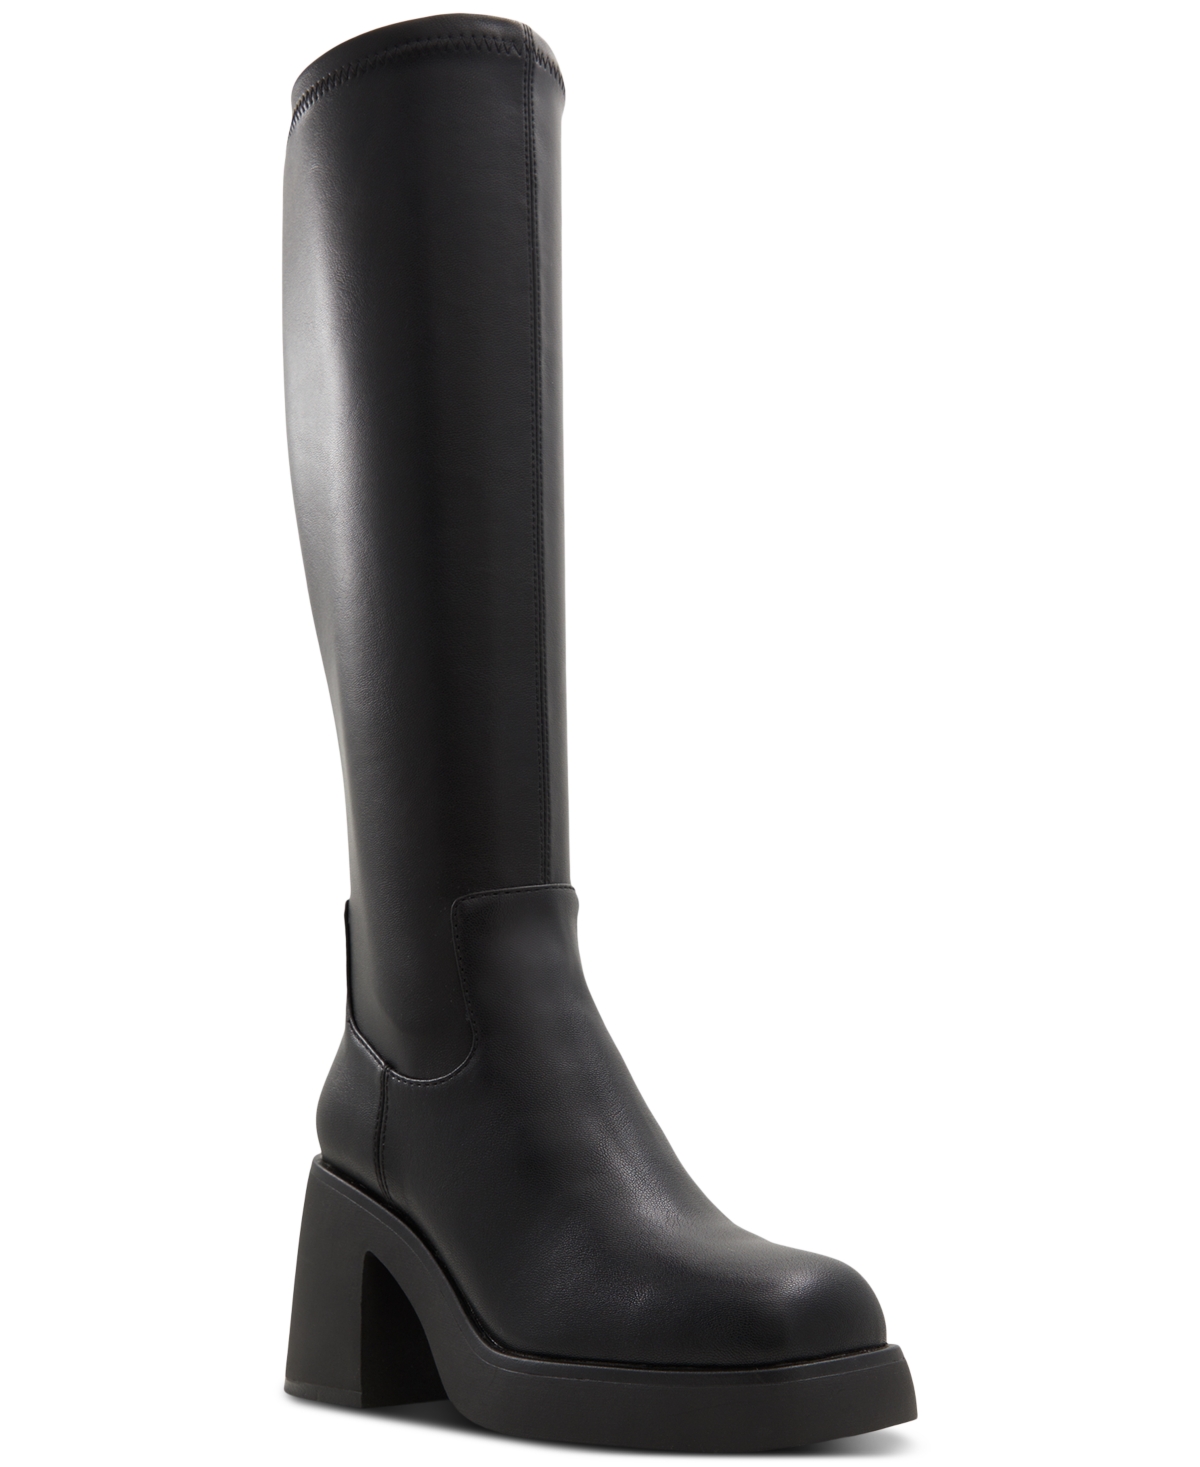 Women's Auster Knee-High Block-Heel Tall Boots - Black Smooth